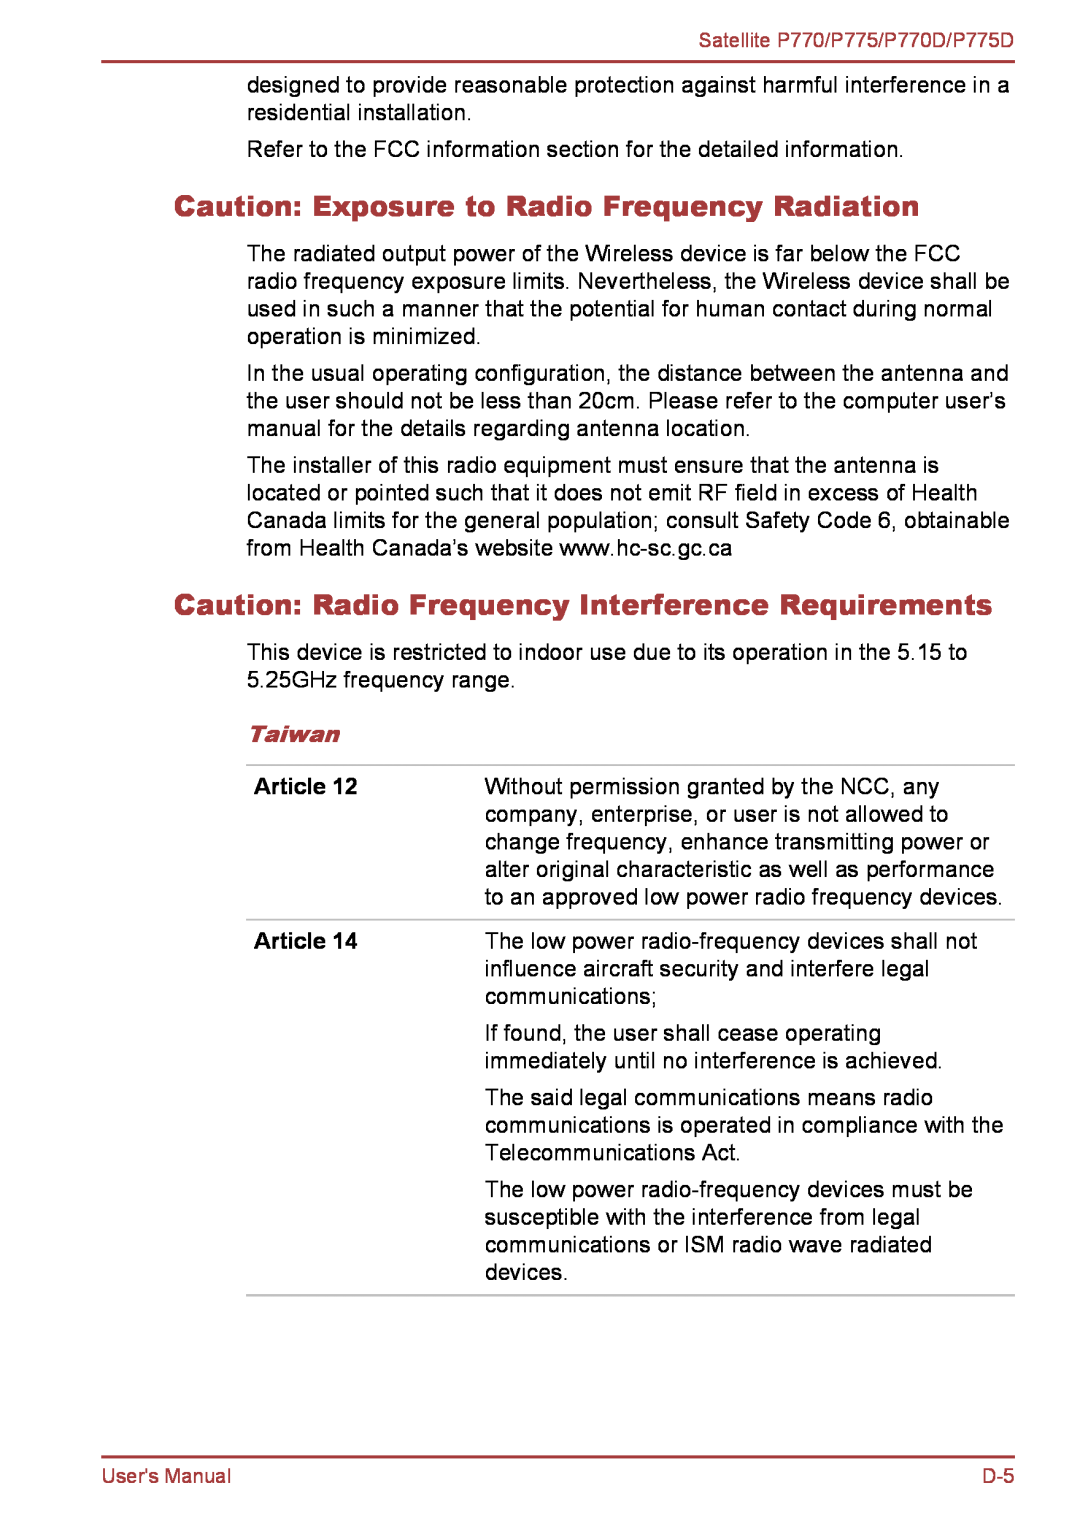 Toshiba P770 Caution Exposure to Radio Frequency Radiation, Caution Radio Frequency Interference Requirements, Taiwan 